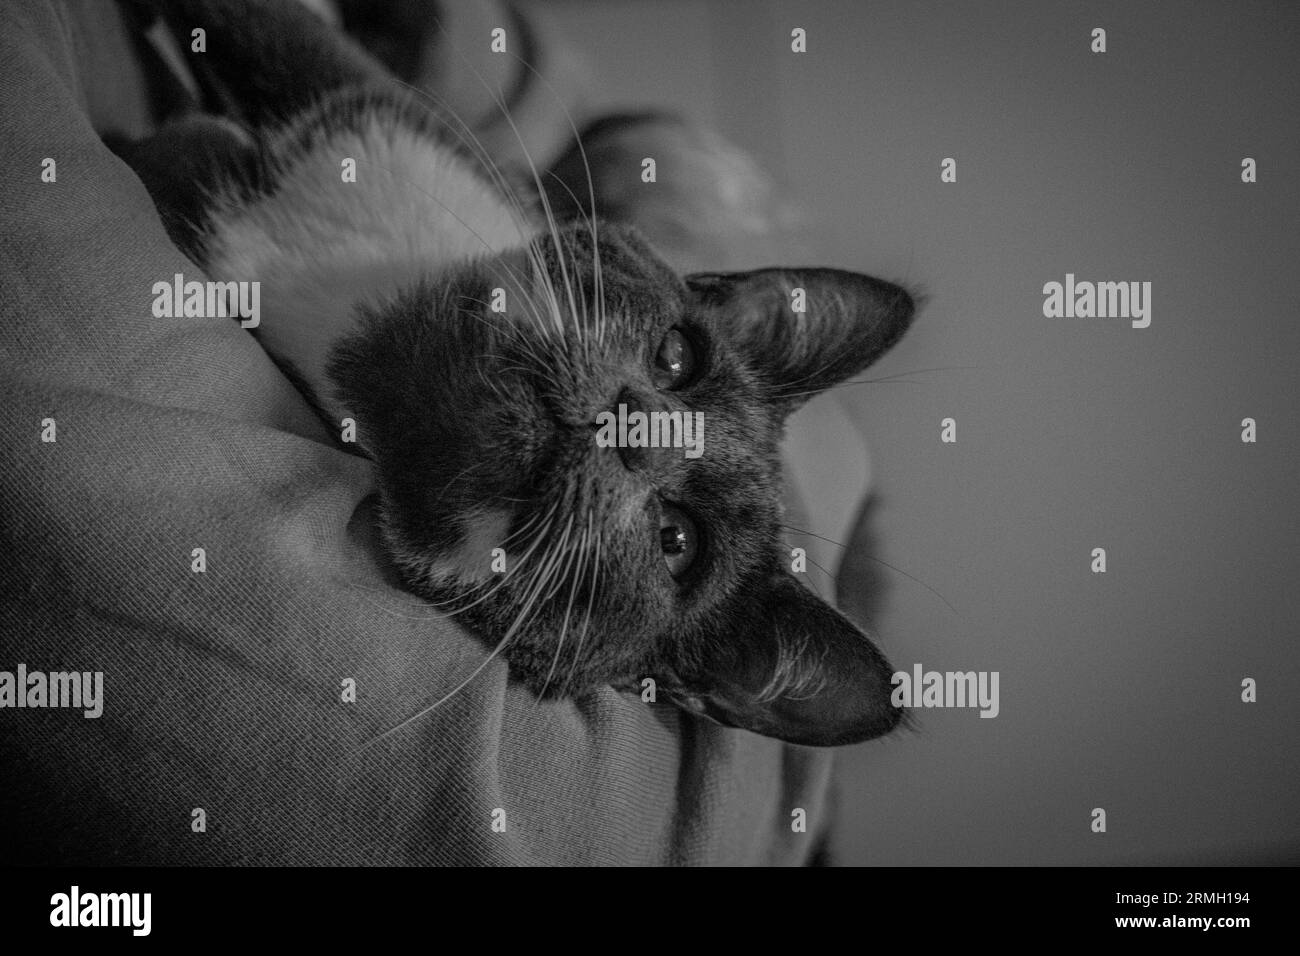 Cat close up Black & white Stock Photo